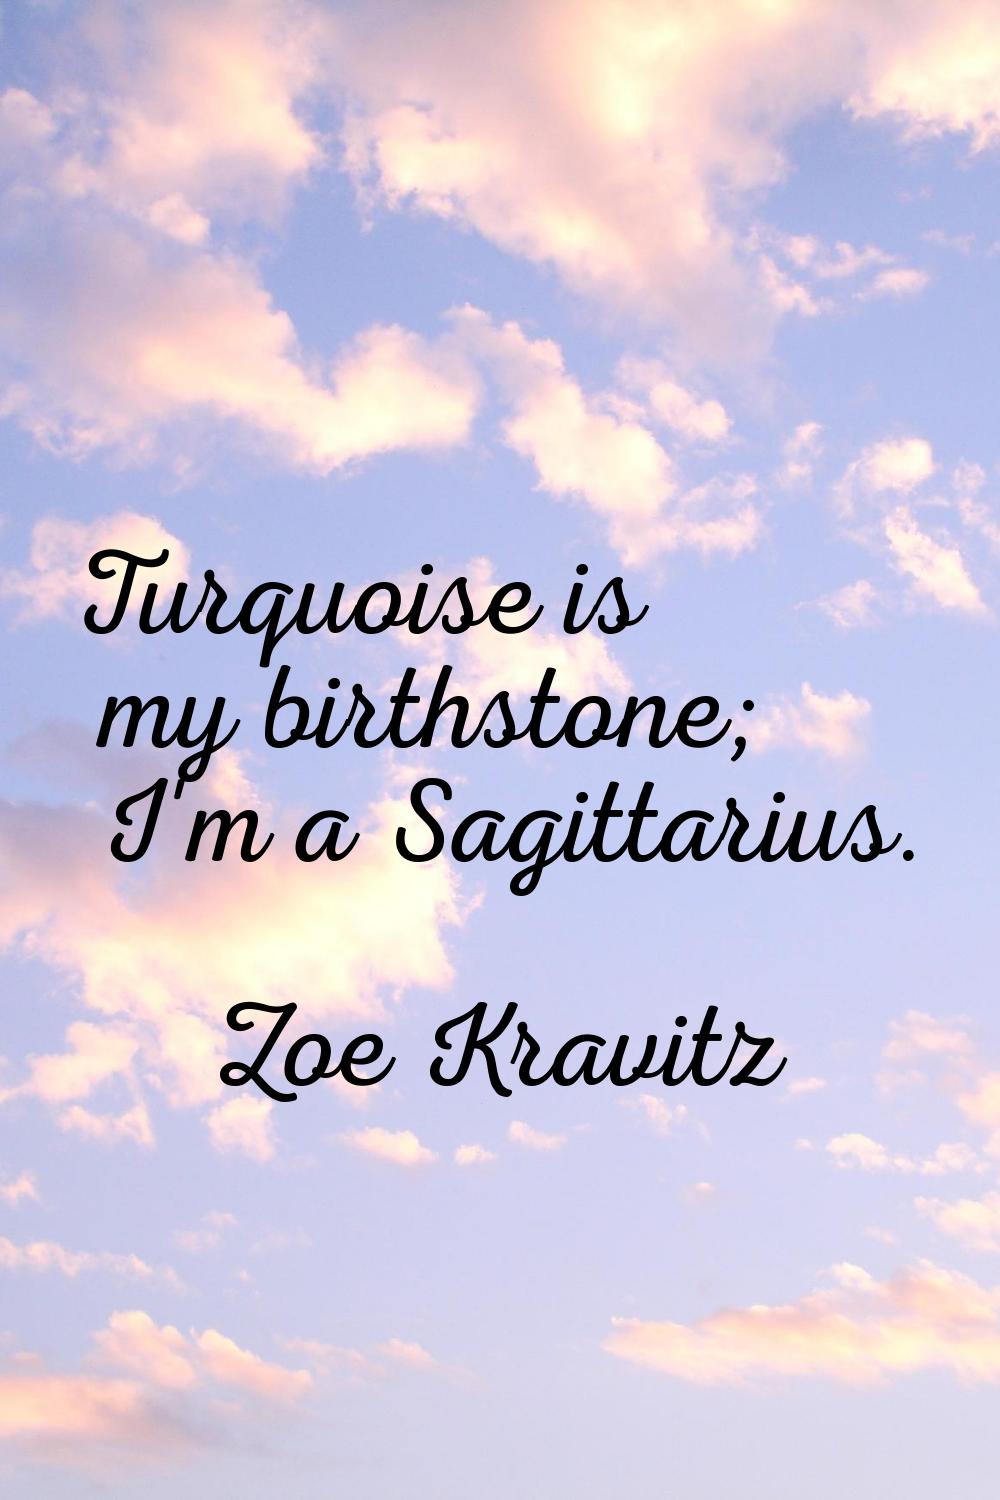 Turquoise is my birthstone; I'm a Sagittarius.